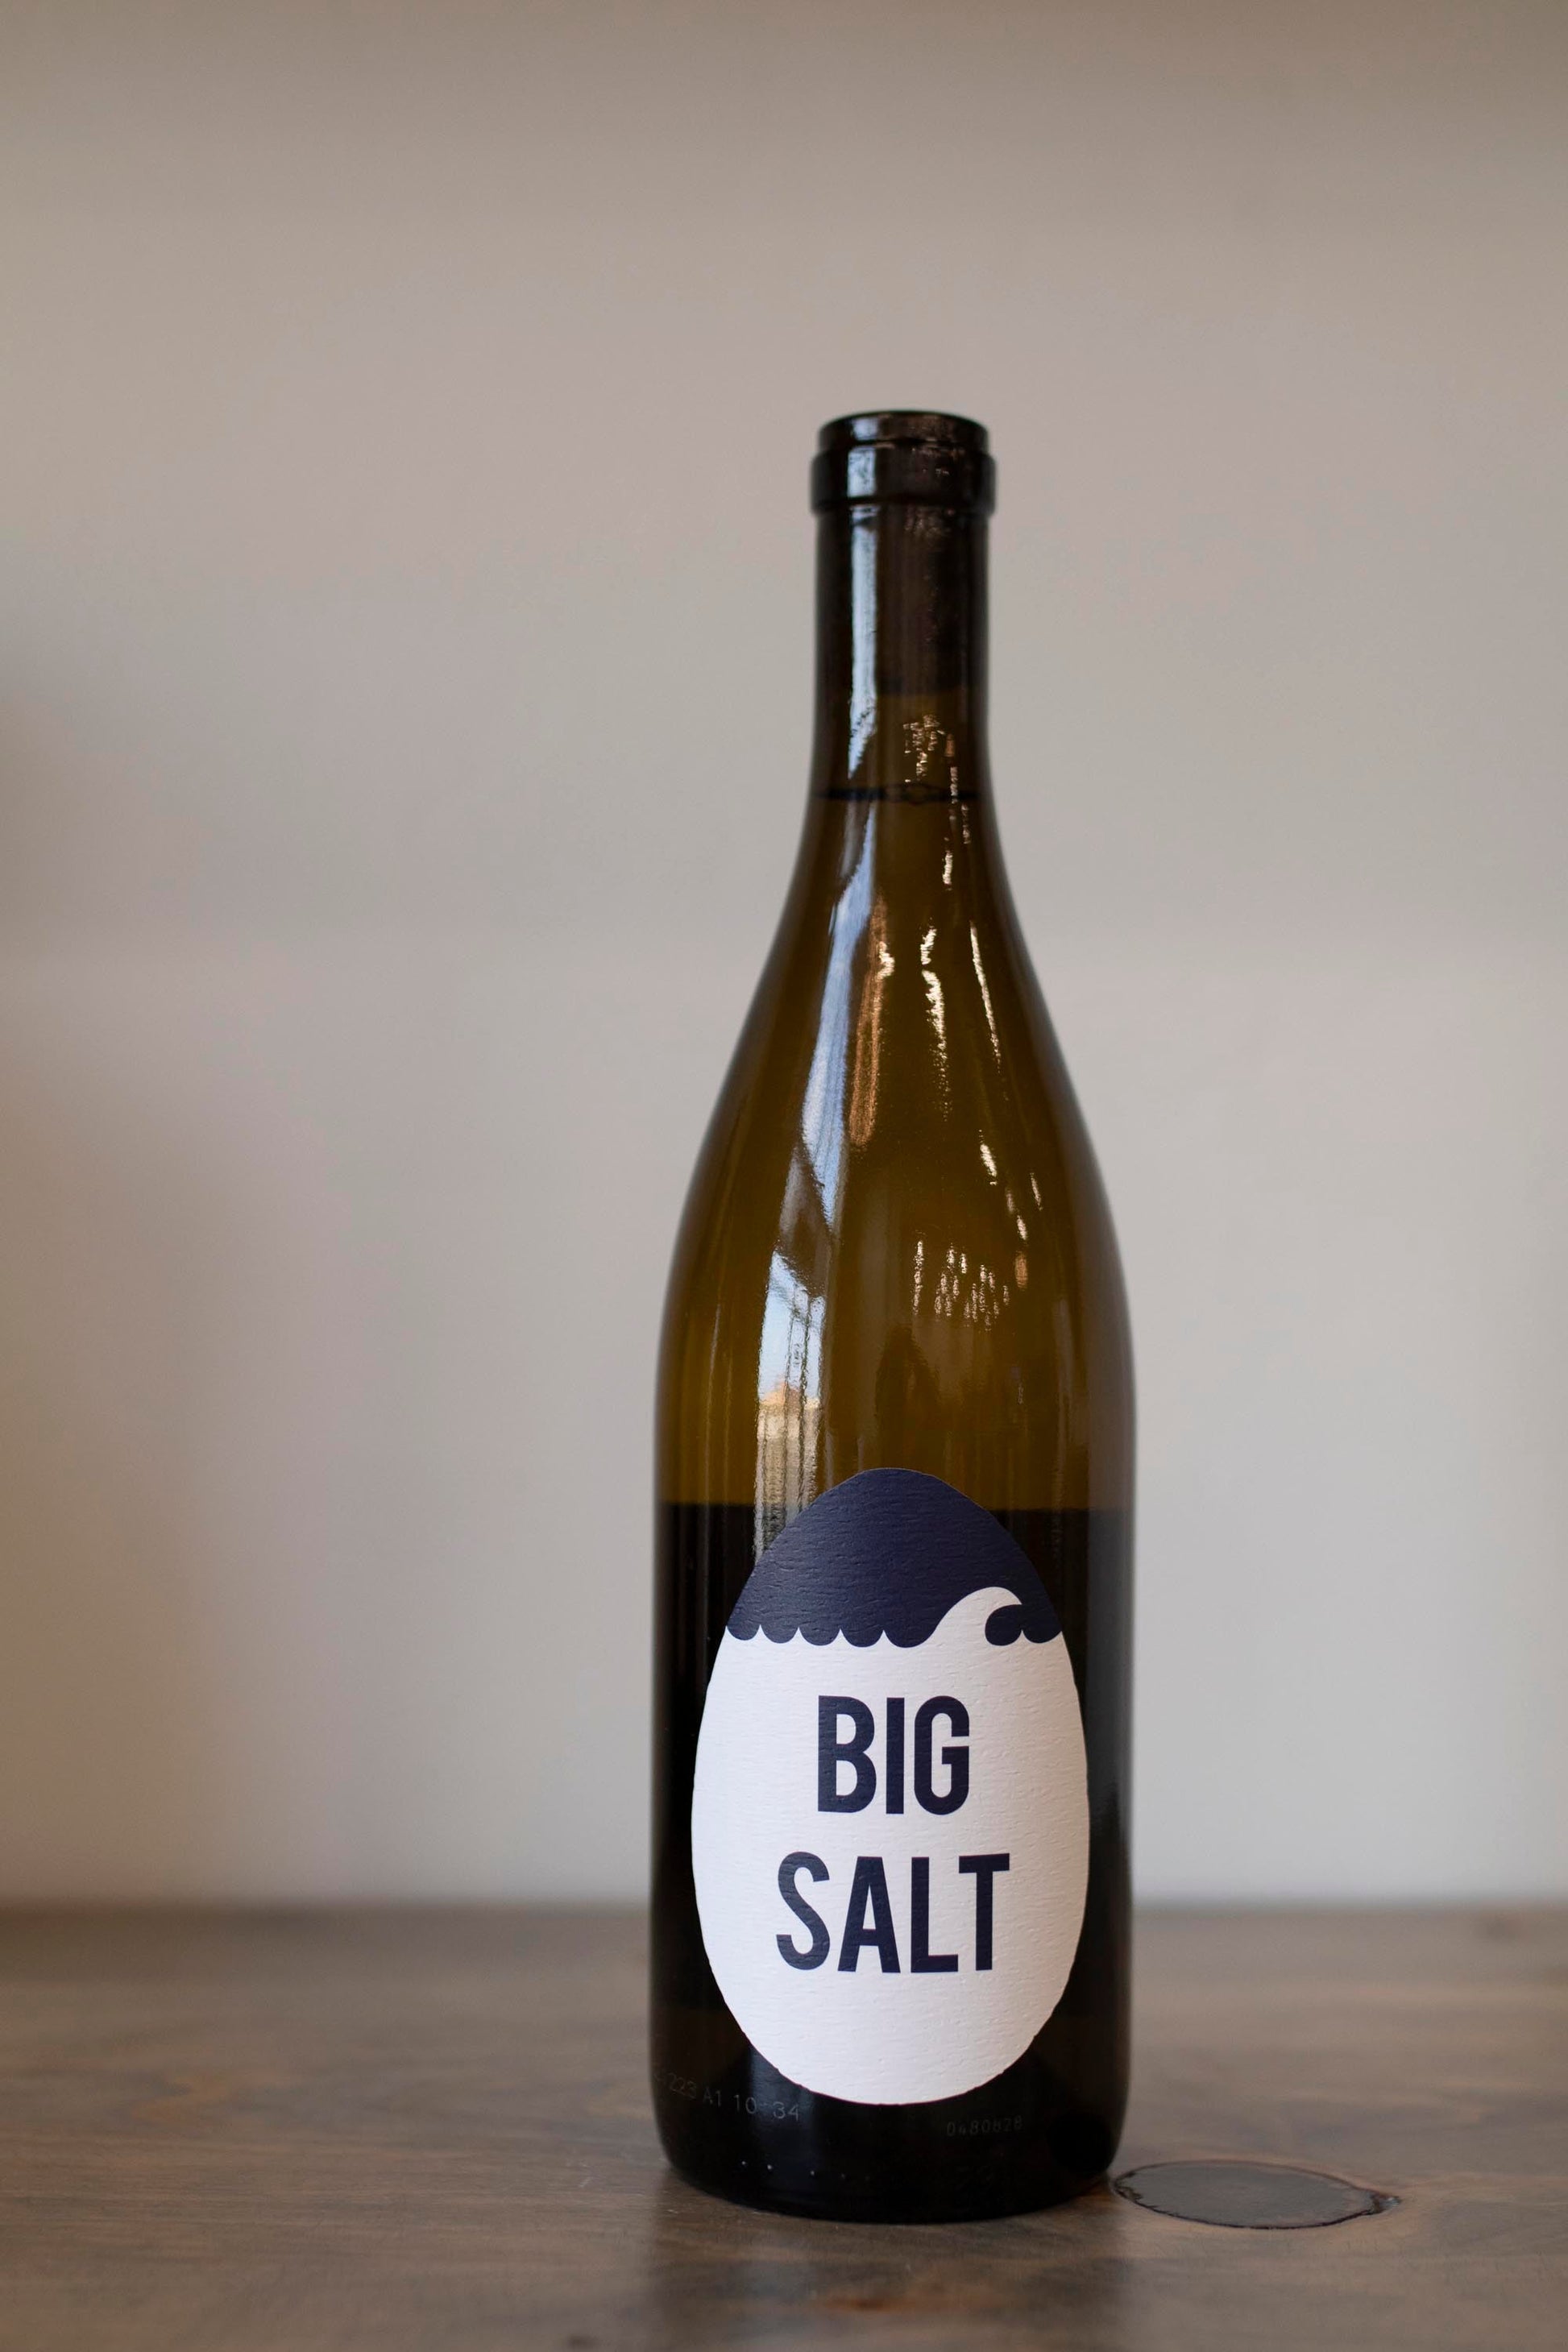 Bottle of Big Salt White Wine found at Vine & Board in 3809 NW 166th St Suite 1, Edmond, OK 73012